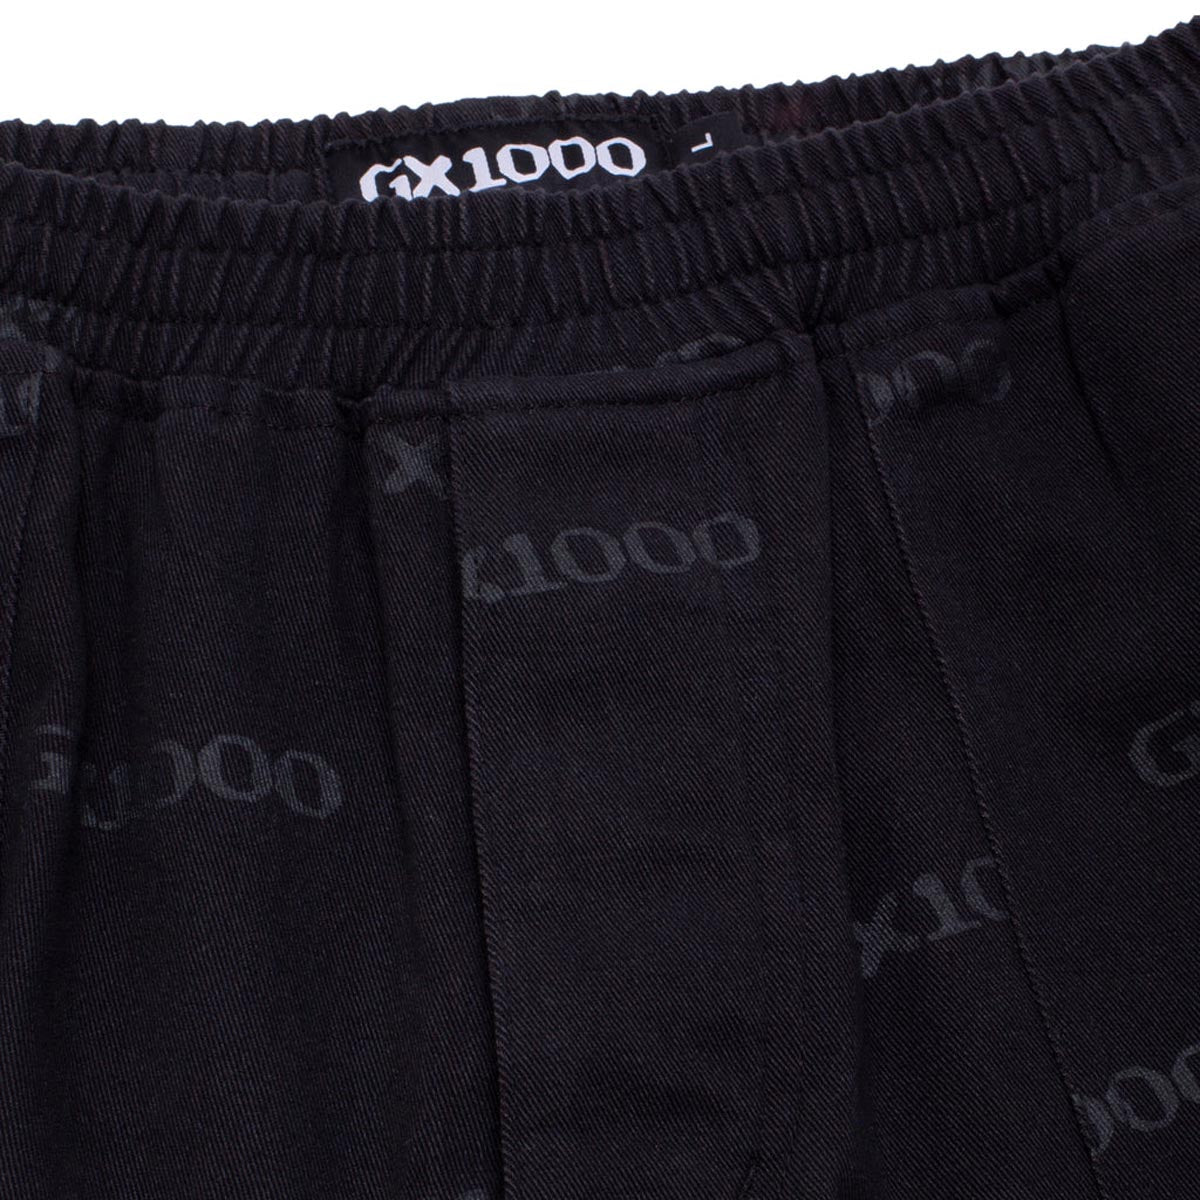 GX1000 Dojo Pants - Black image 3